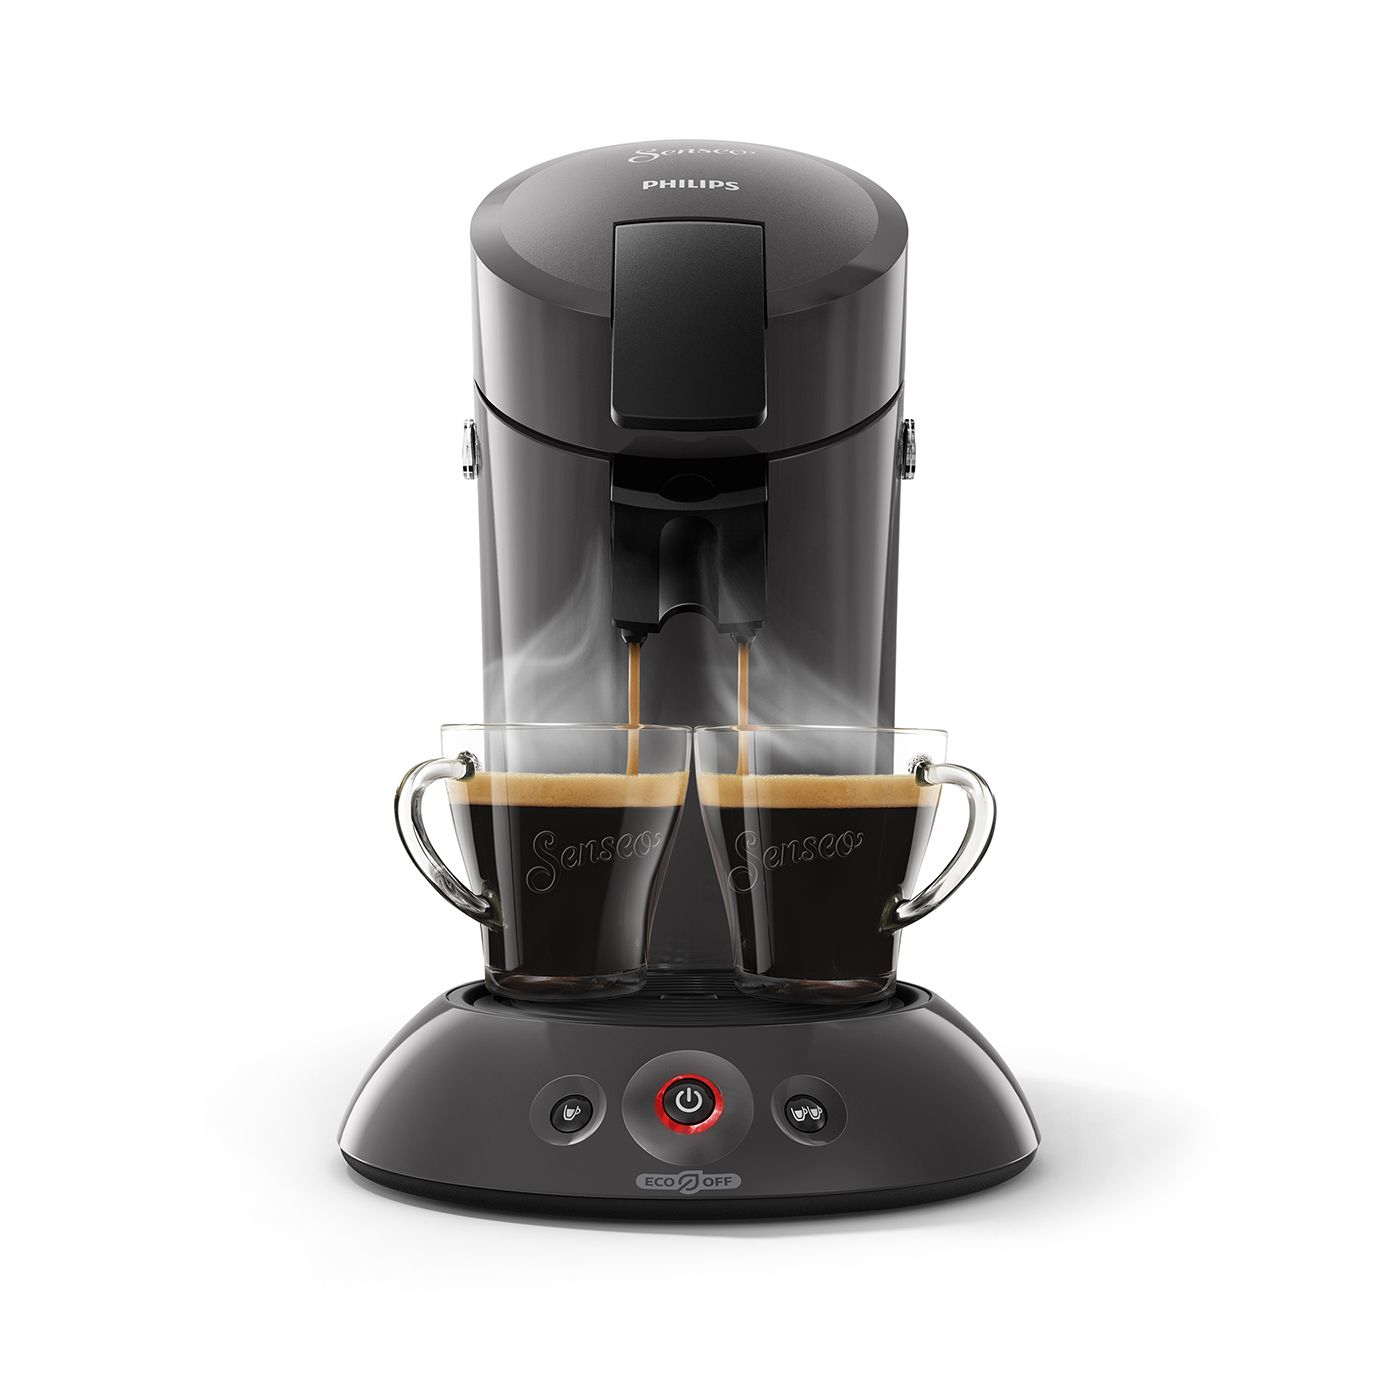 Senseo HD6552/37 coffee maker